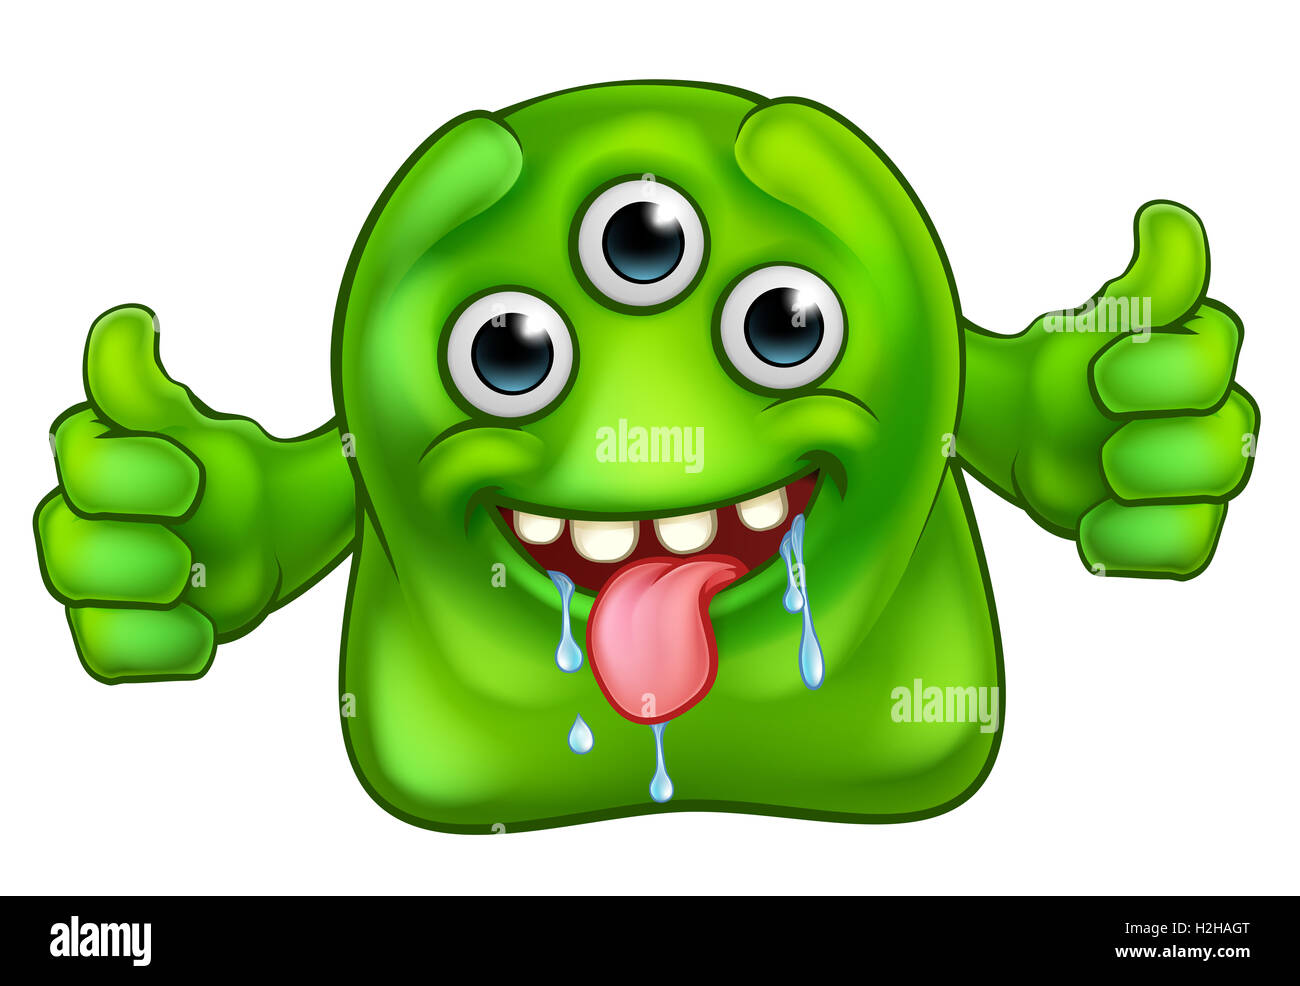 A cartoon cute green alien or monster character Stock Photo